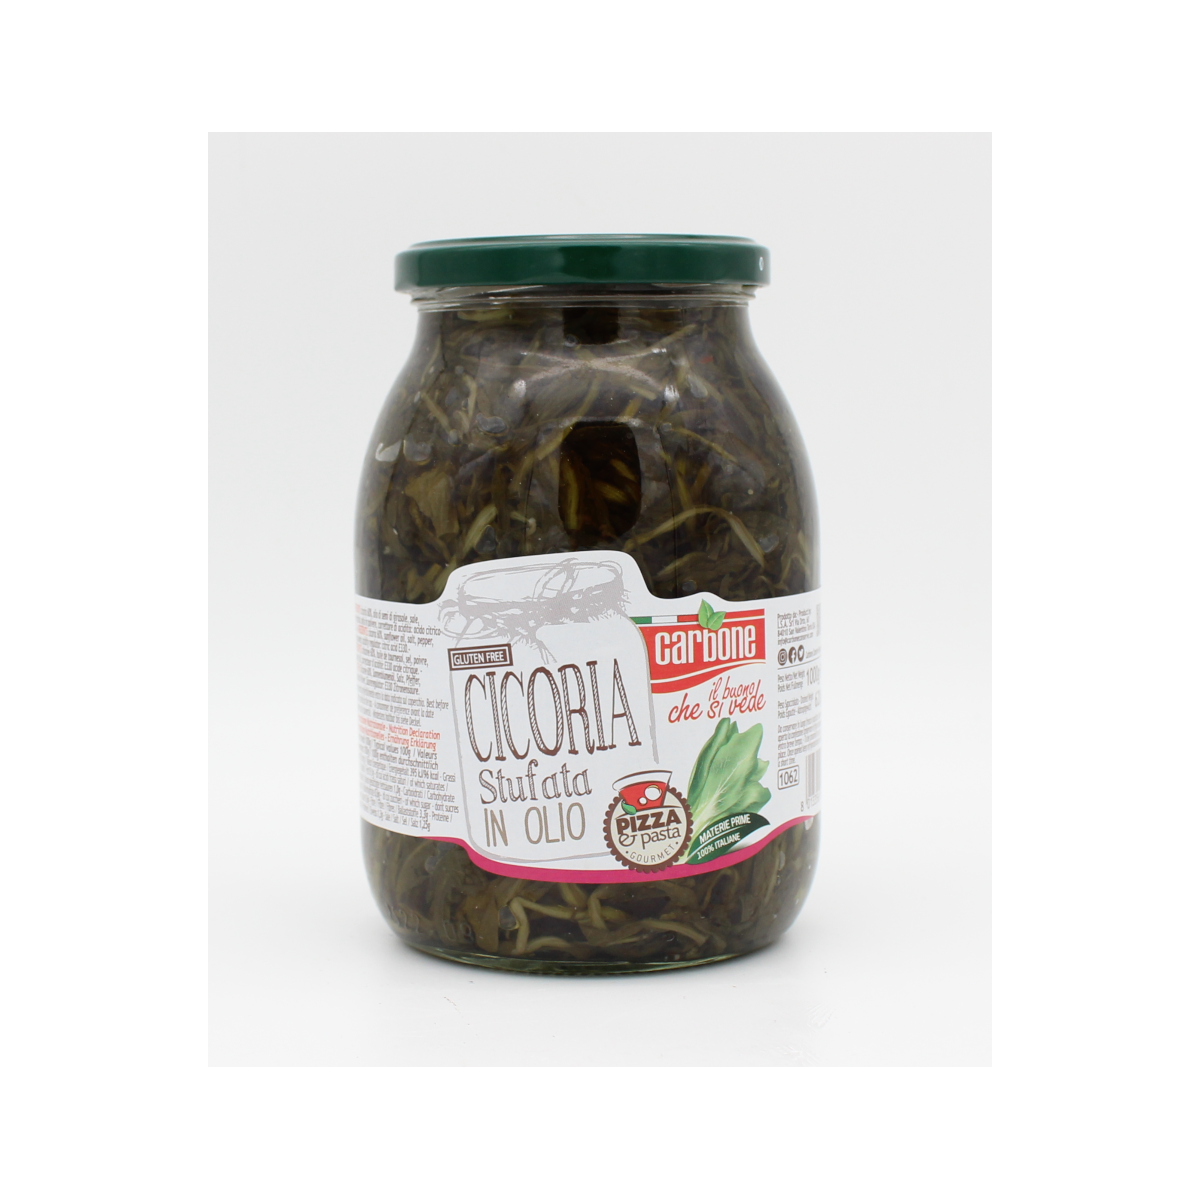 Cicoria Stufata -geschmorte Zichorie - Carbone -1,062kg